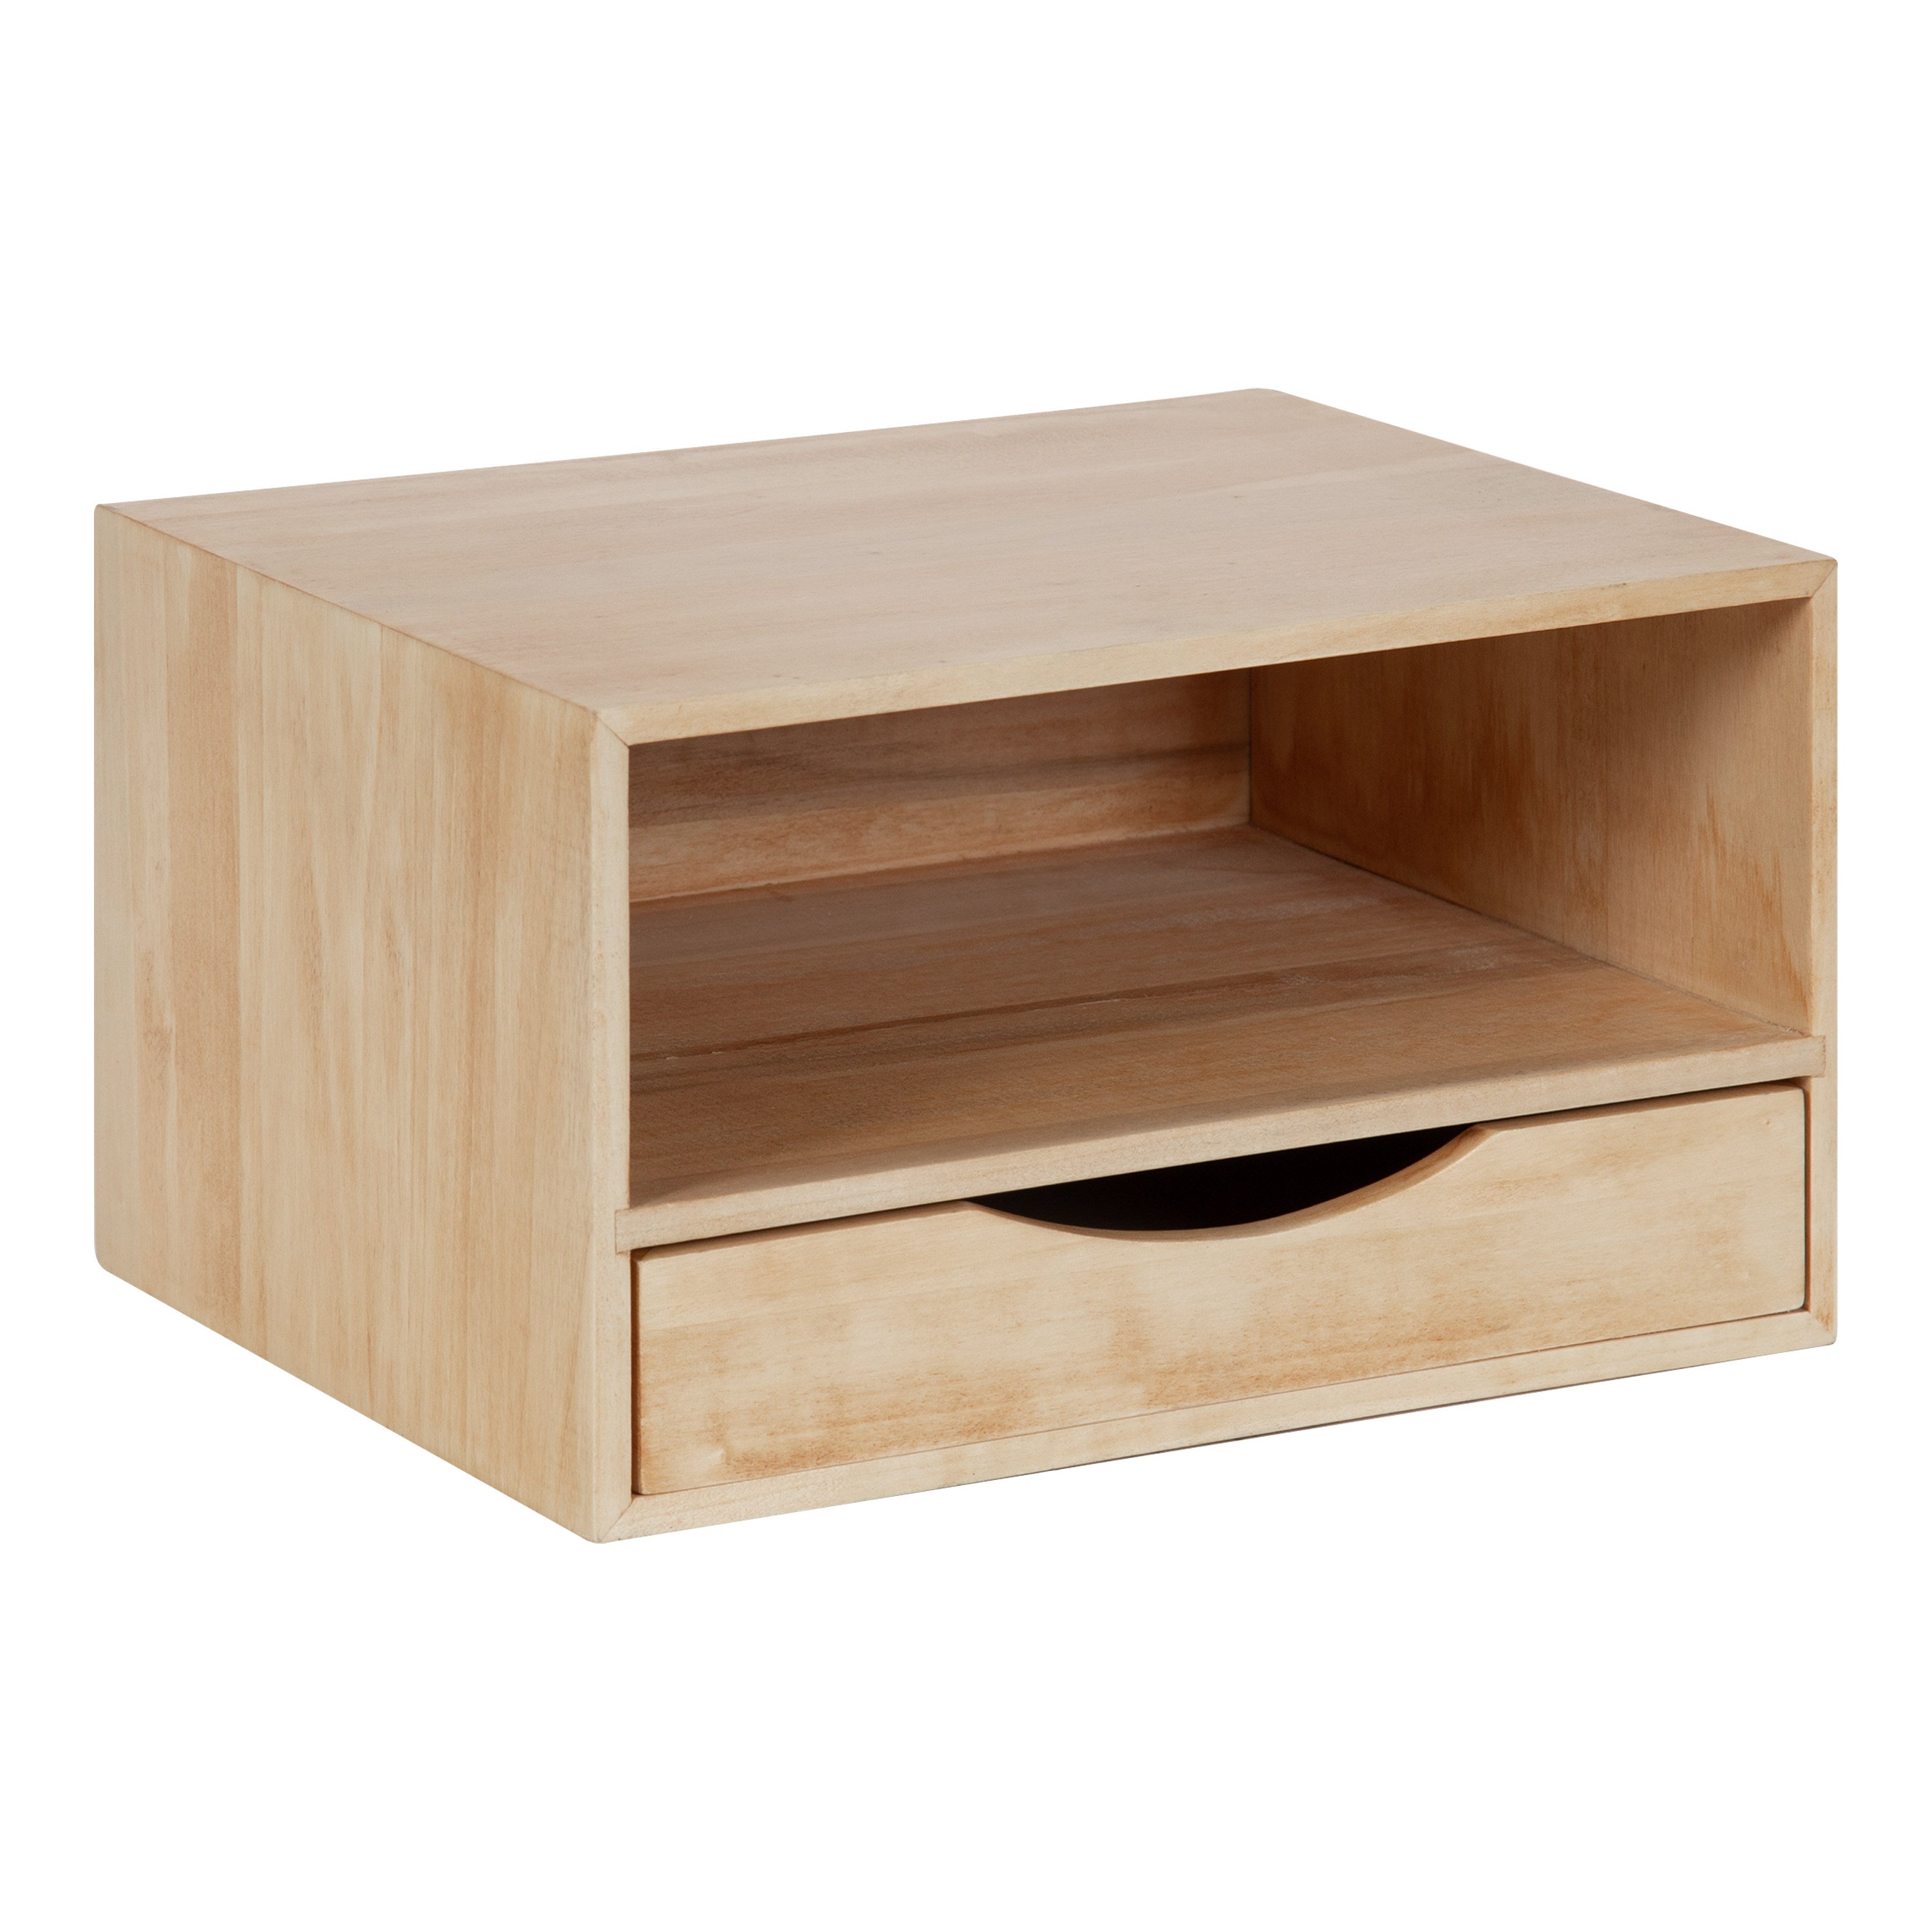 Floating shelf / Solid wood shelf / Bookshelf / Wall shelving unit / Entryway  shelf /Storage shelf / in Oak or Walnut wood